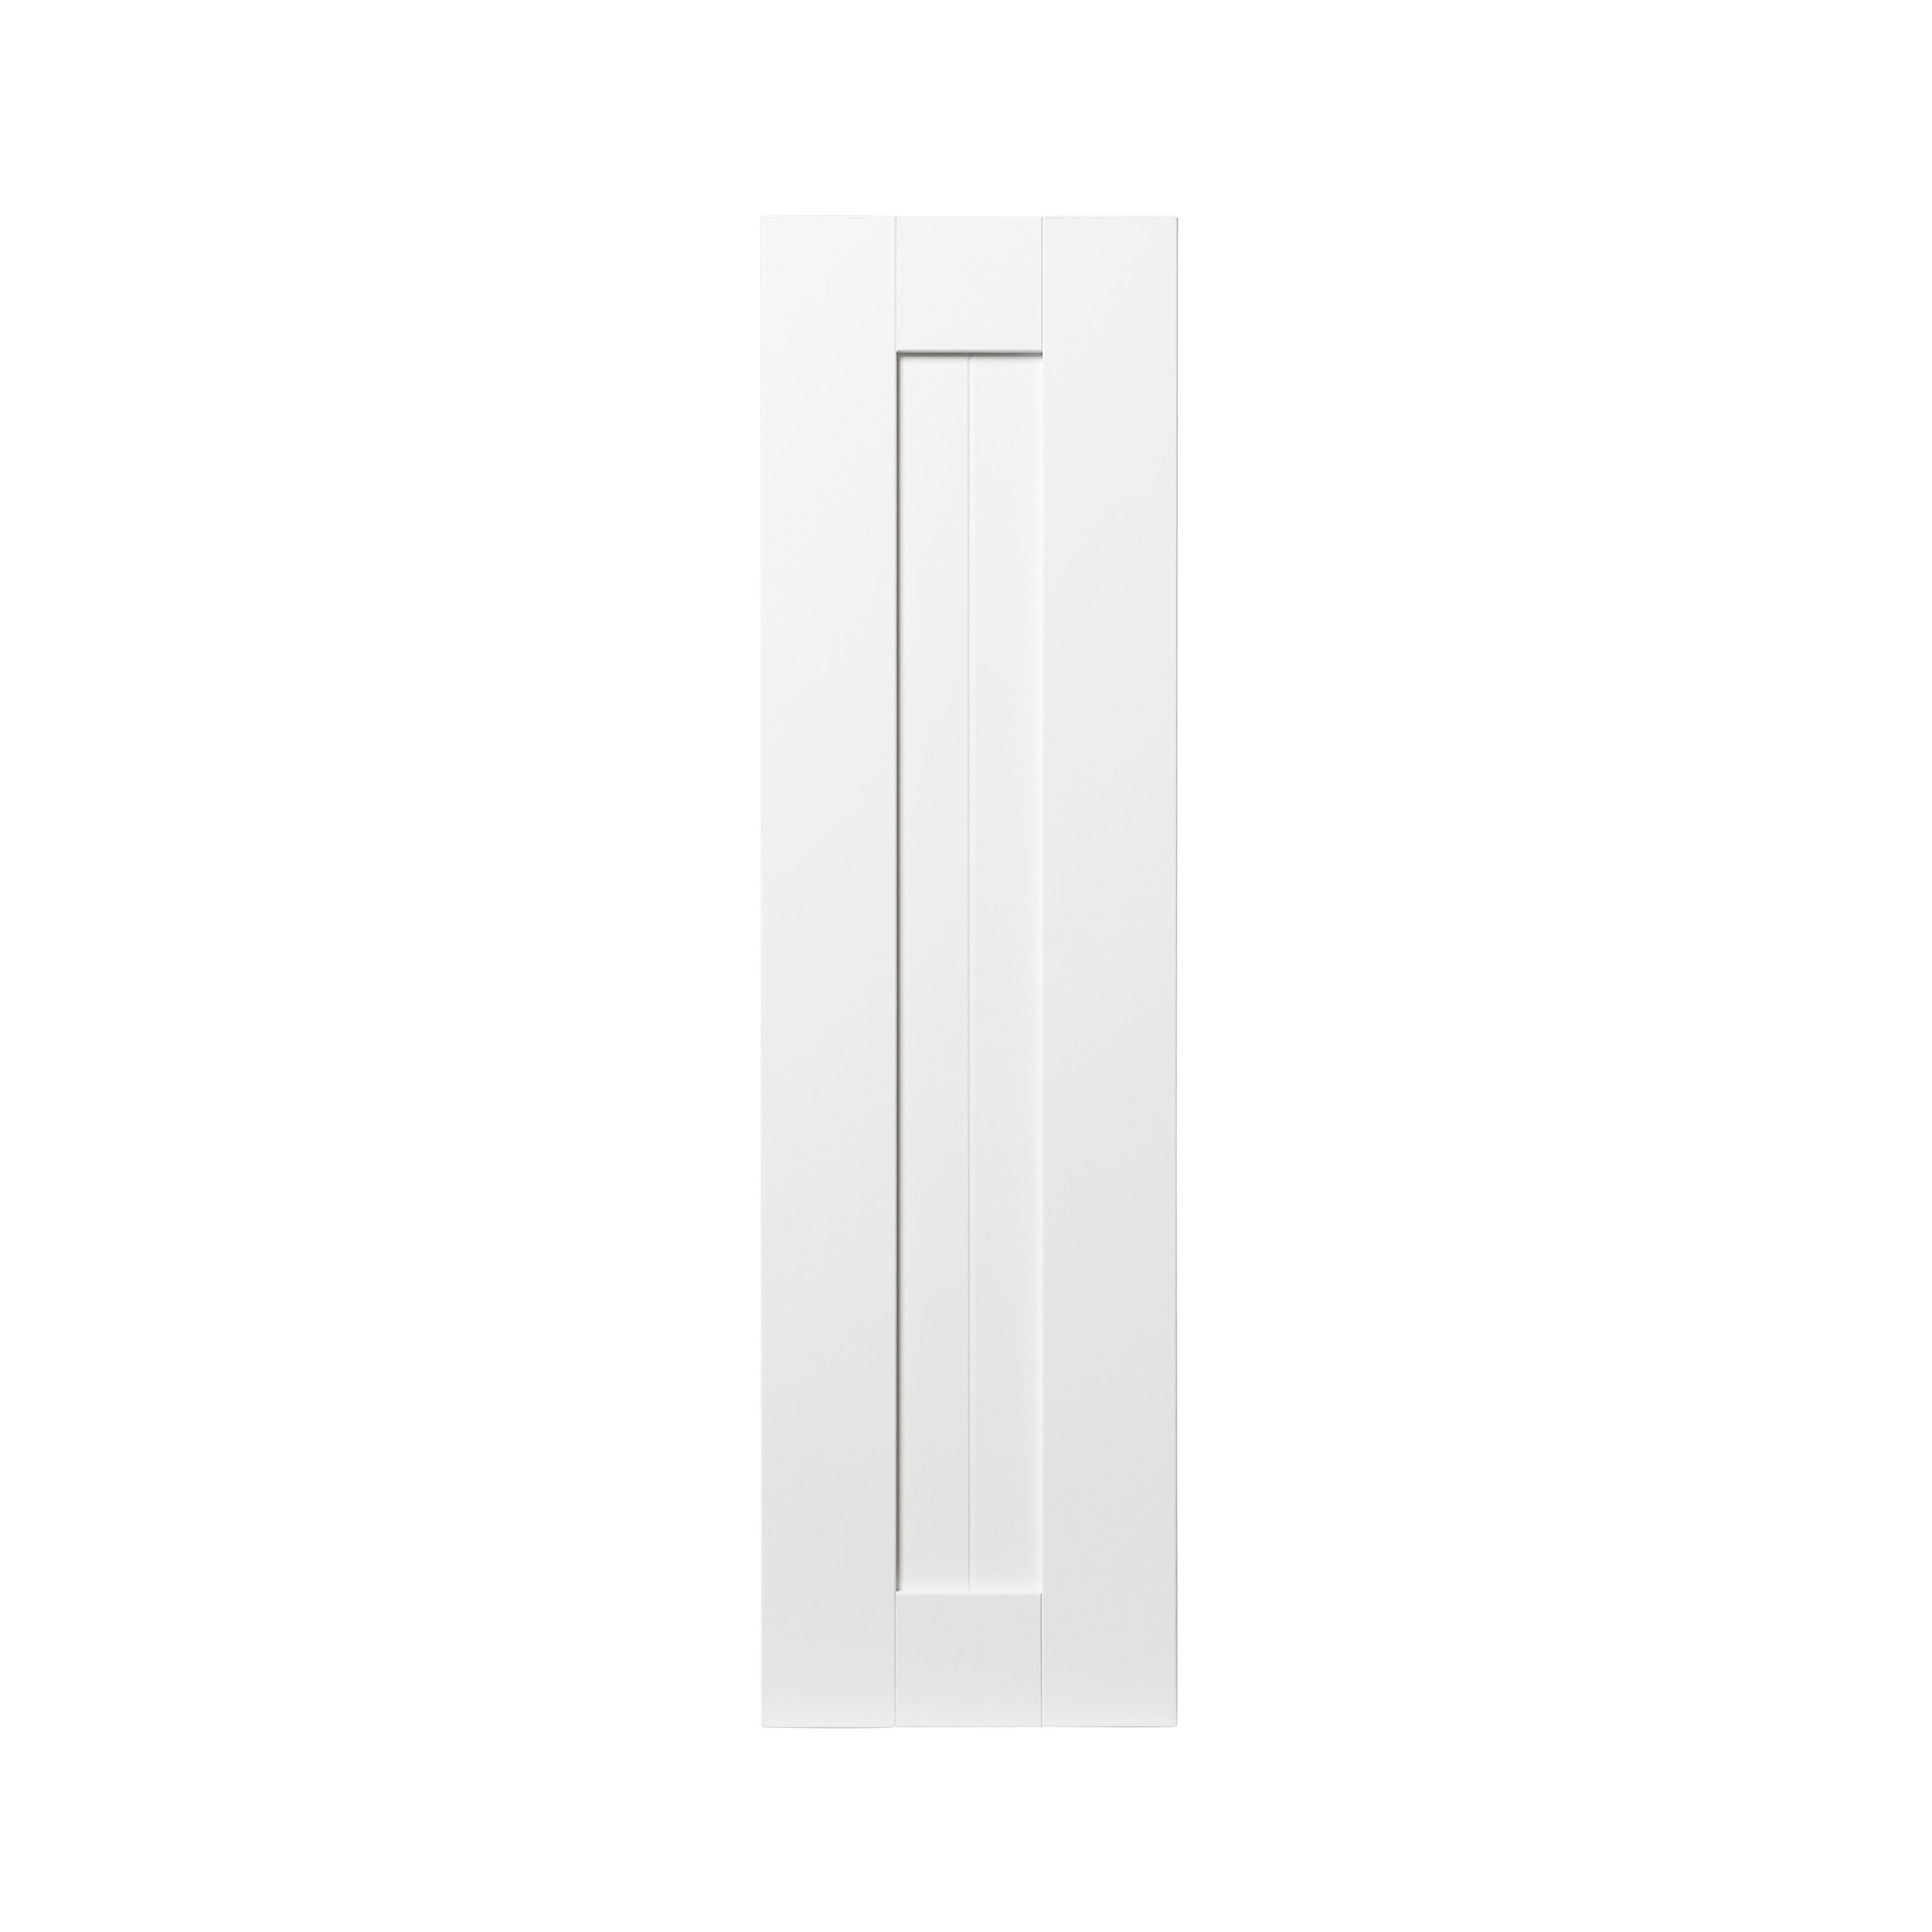 GoodHome Alpinia Matt white tongue & groove shaker Tall wall Cabinet door (W)250mm (H)895mm (T)18mm